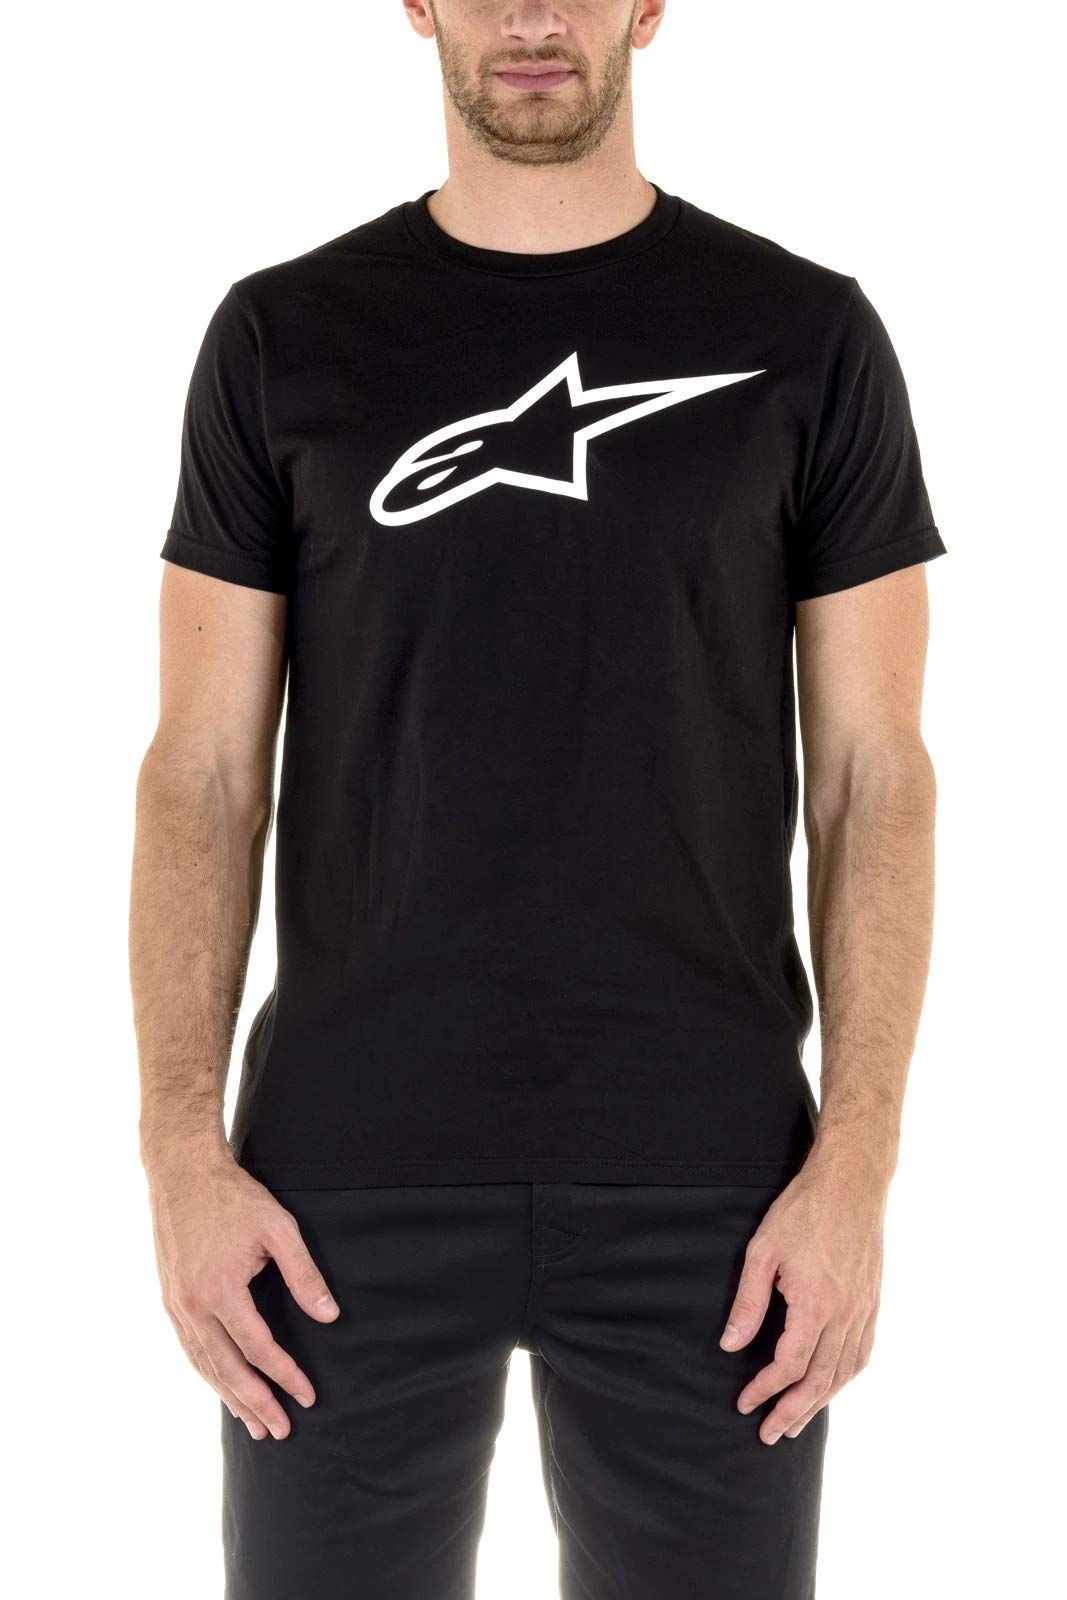 Alpinestars Herren Ageless Classic T-Shirt, Black/White, M EU von Alpinestars